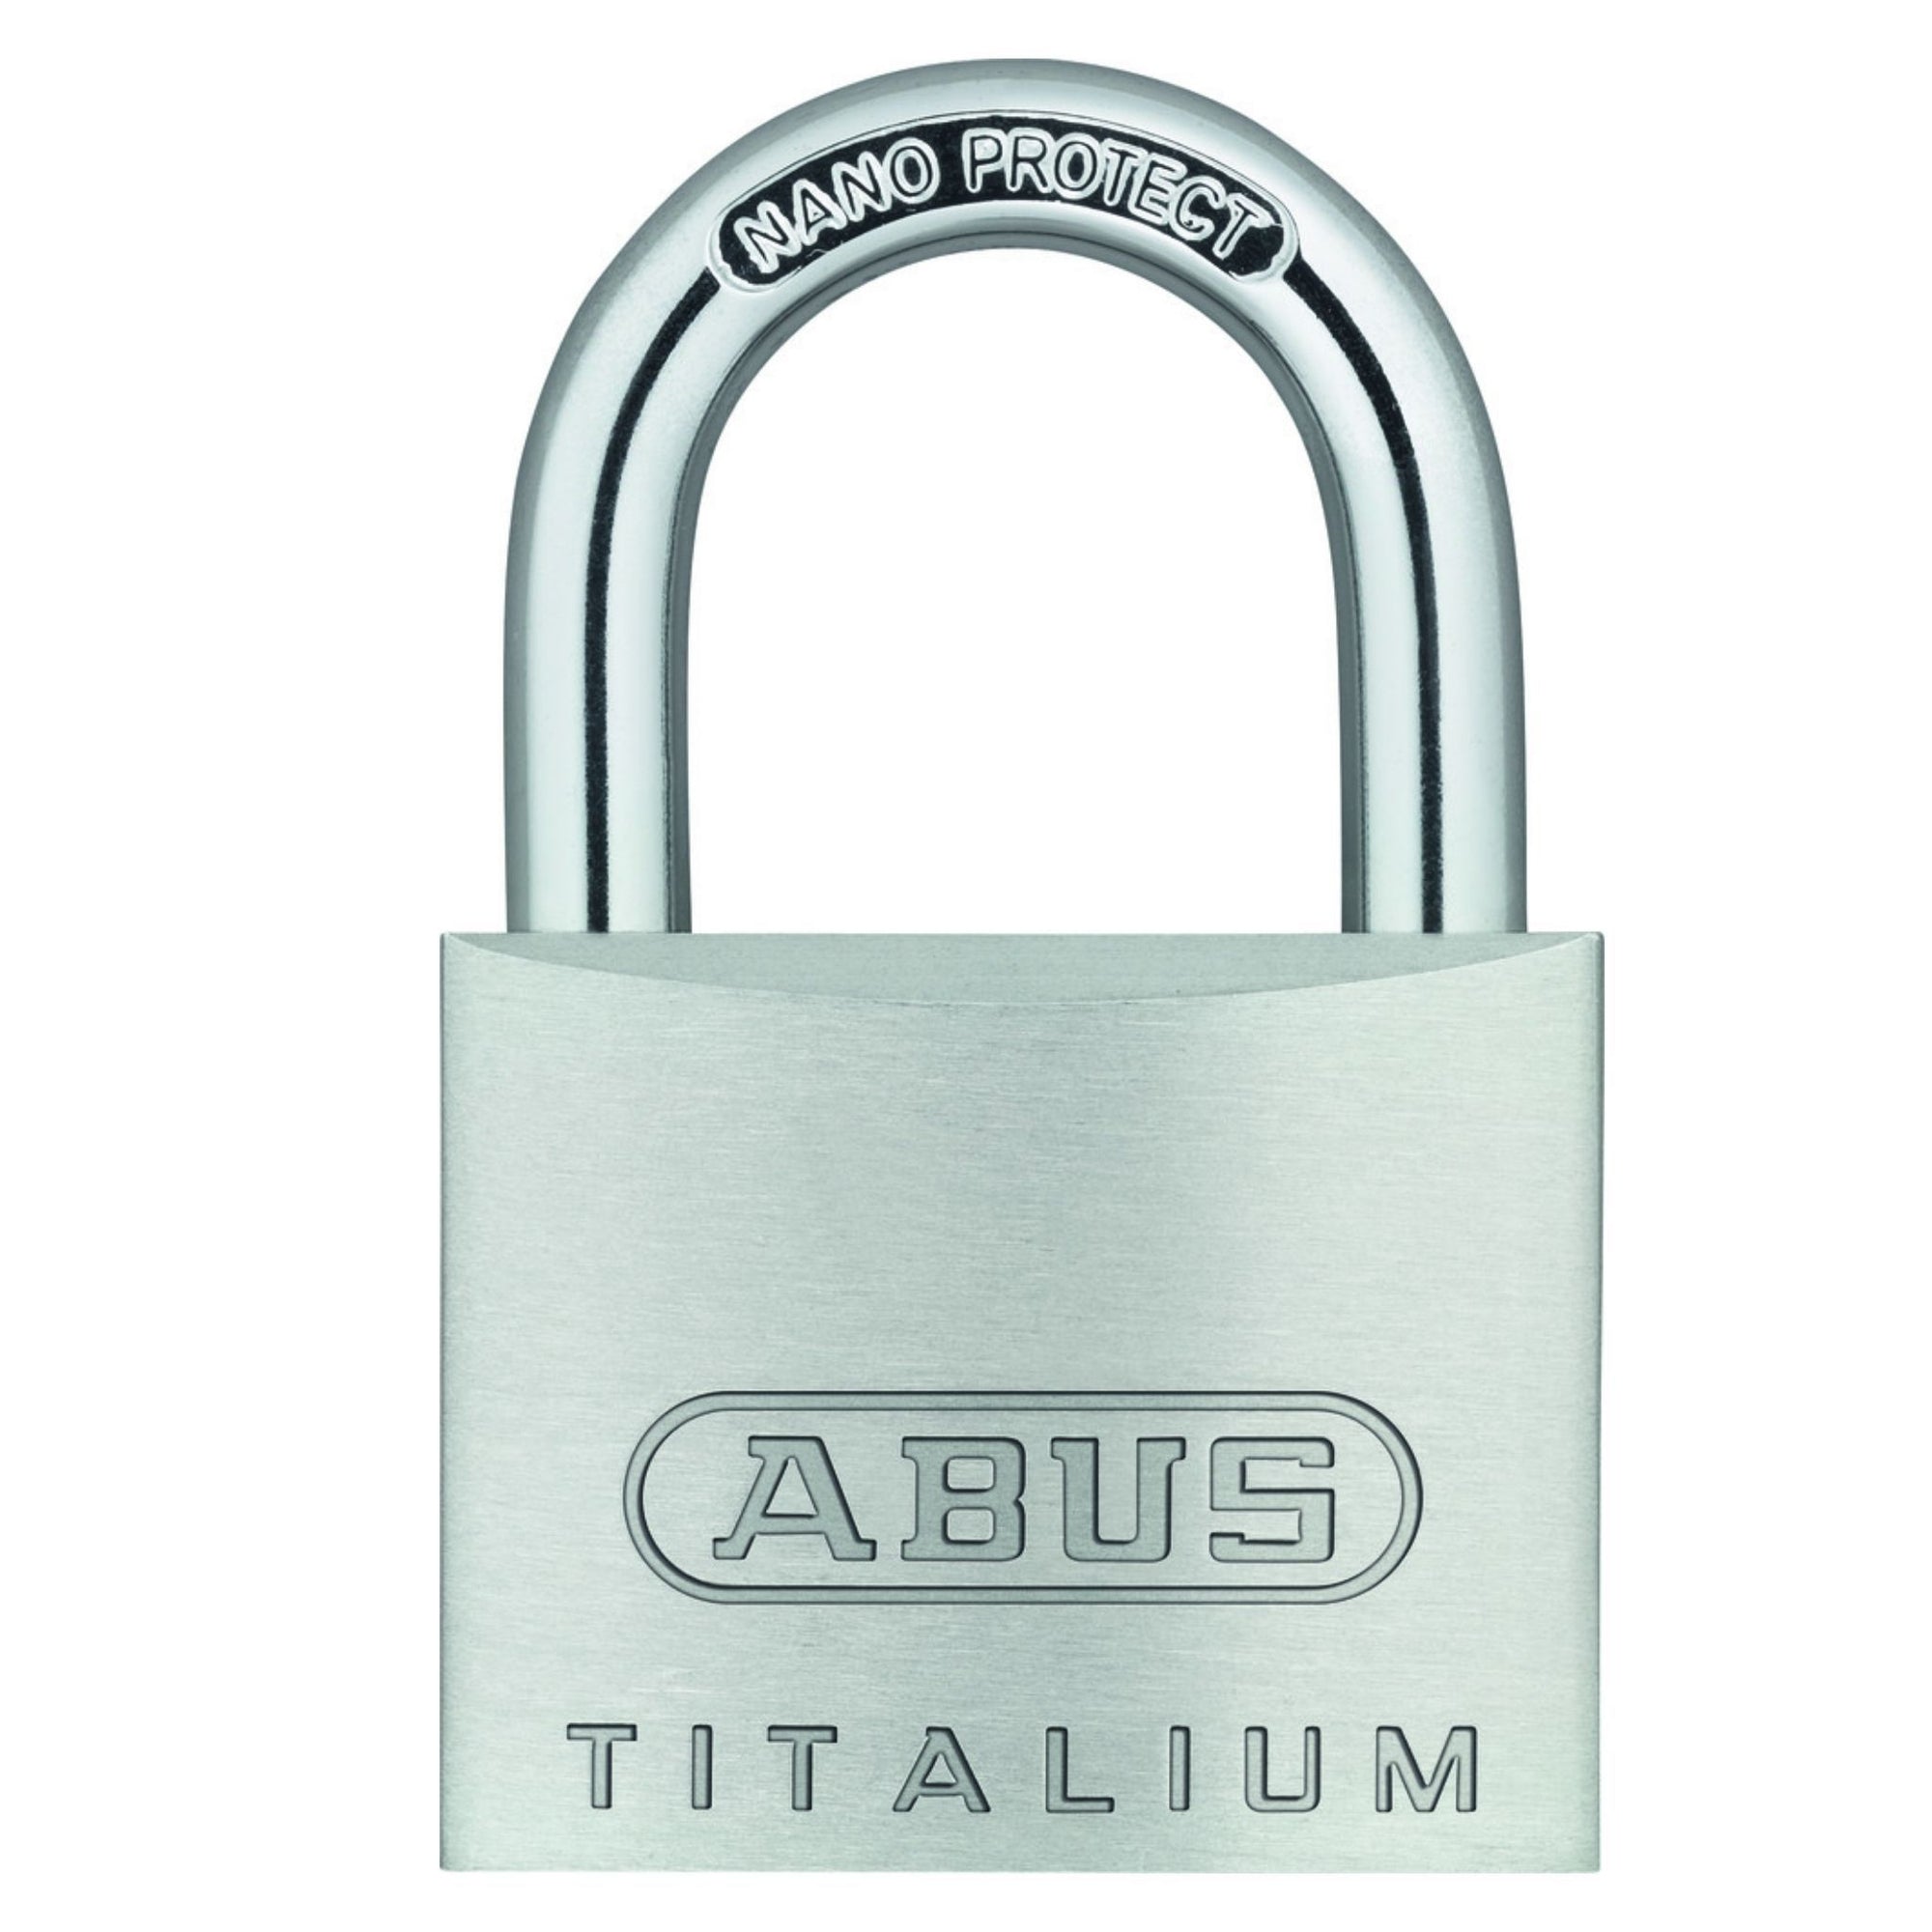 Abus 64TI/40 KA 6412 Lock Keyed Alike Titalium Padlocks Matched to Existing Key Number KA6412 - The Lock Source